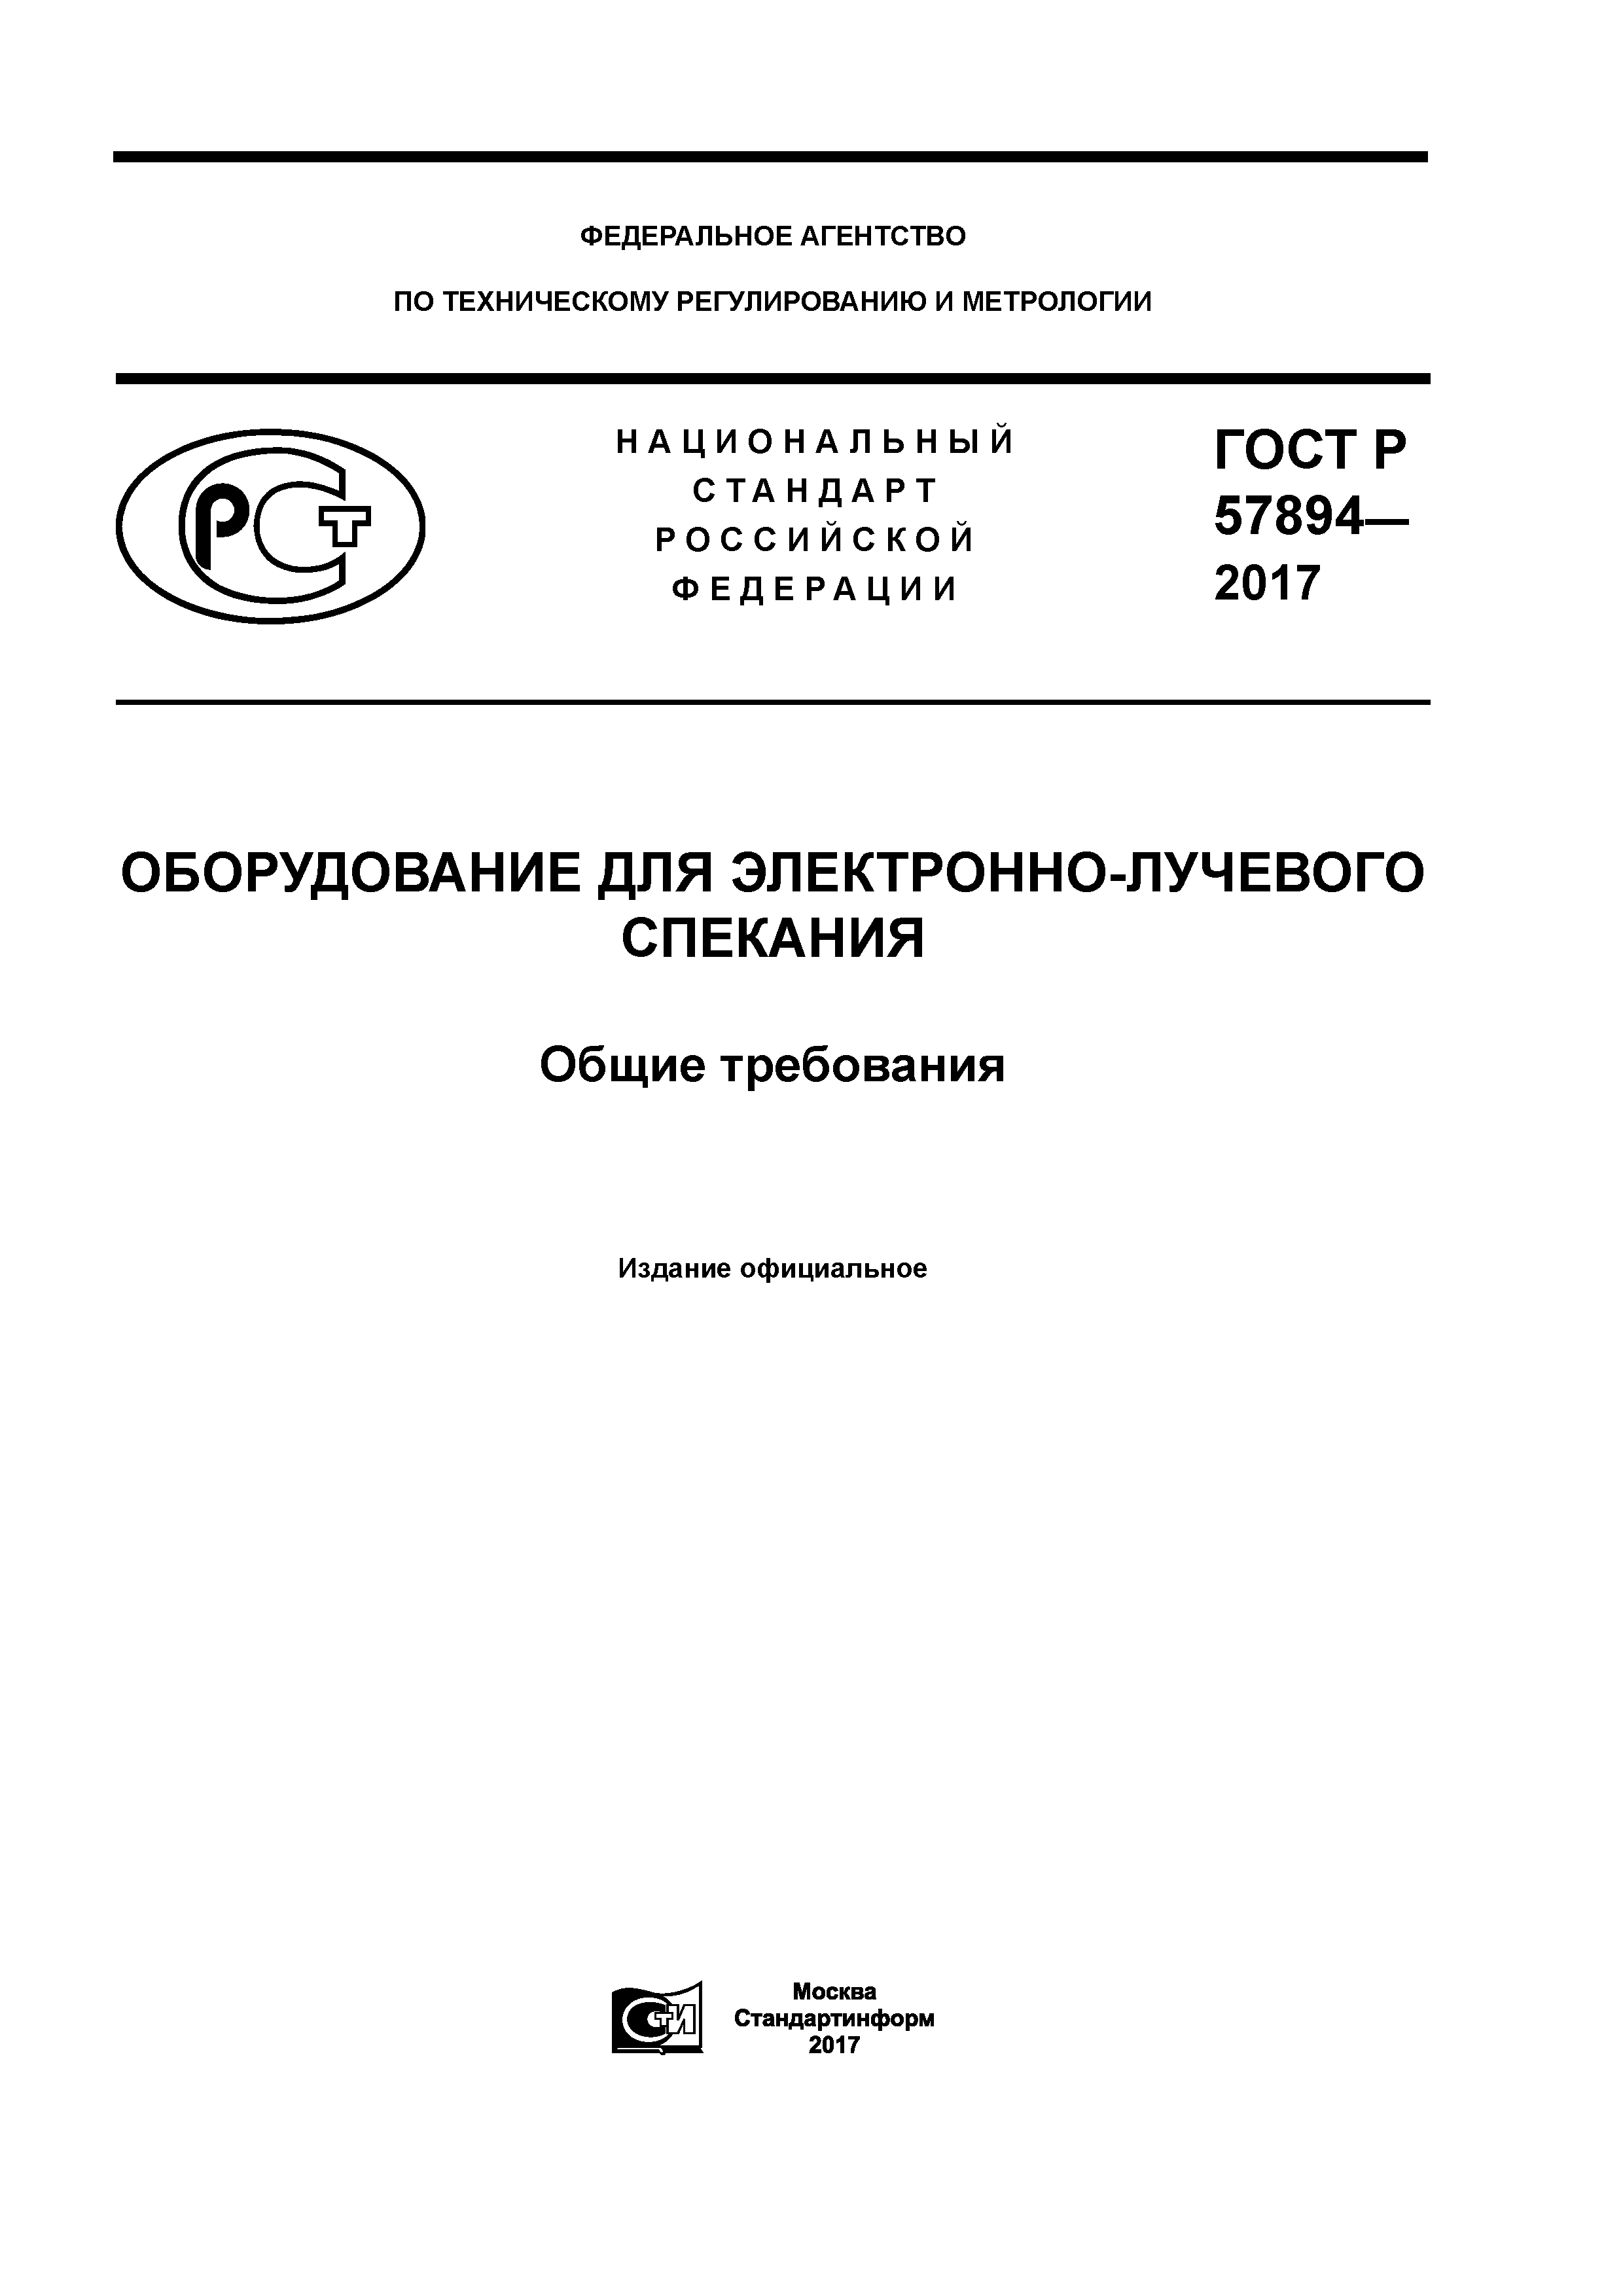 ГОСТ Р 57894-2017